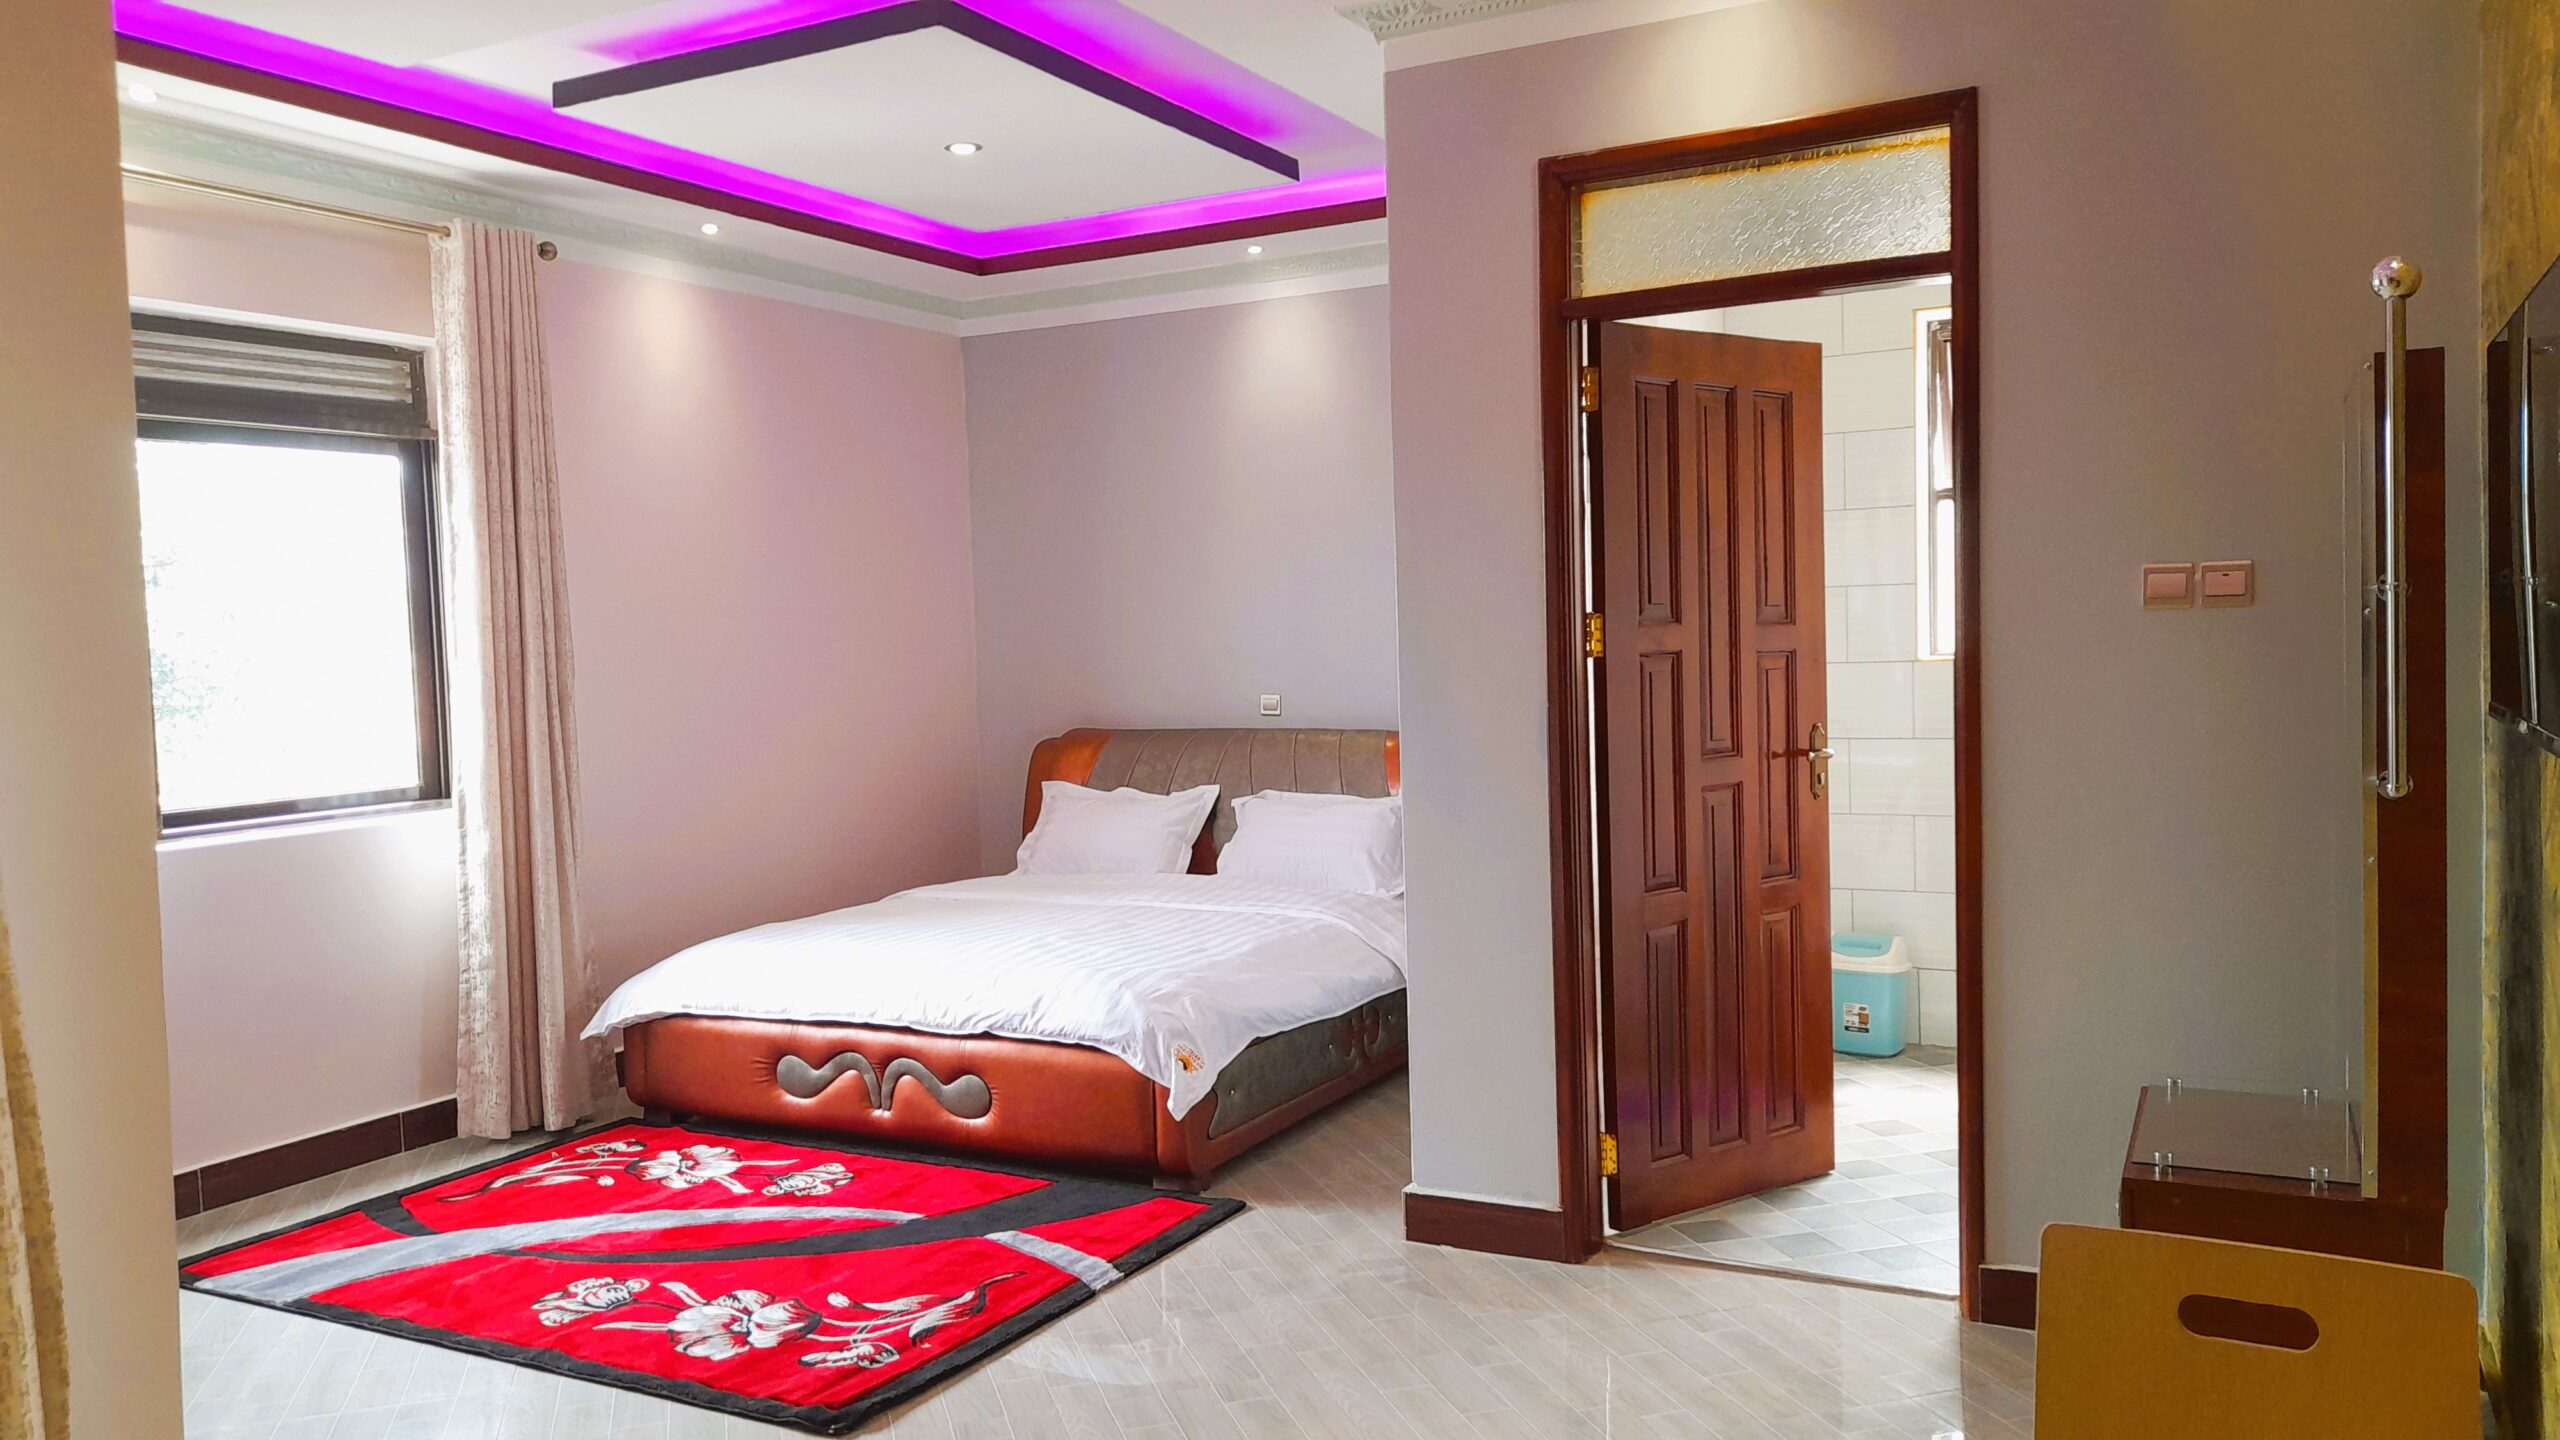 Extecutive suite Bedroom photo Das Berliner Hotel Bulenga, Kampala, Uganda Central Region